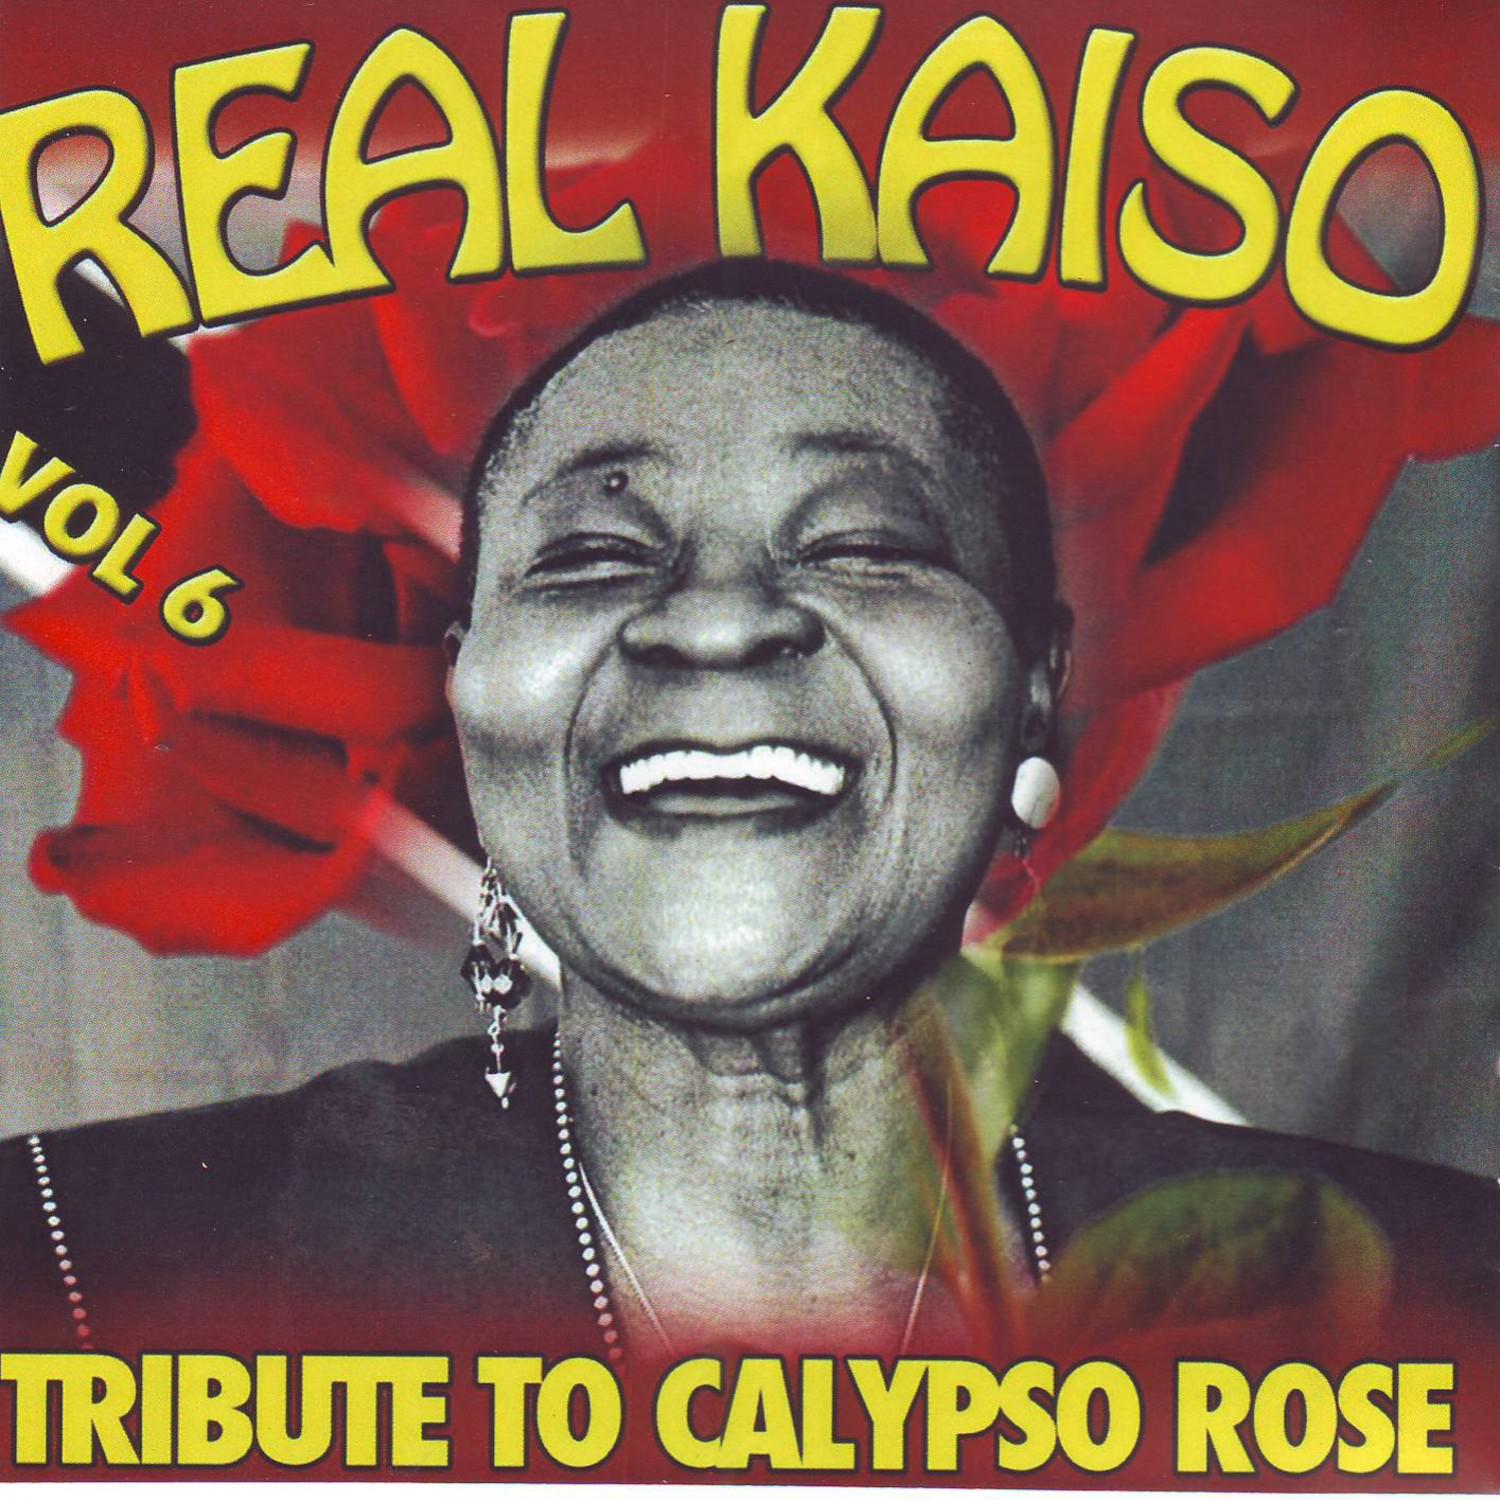 Real Kaiso Vol. 6 (Tribute To Calypso Rose)